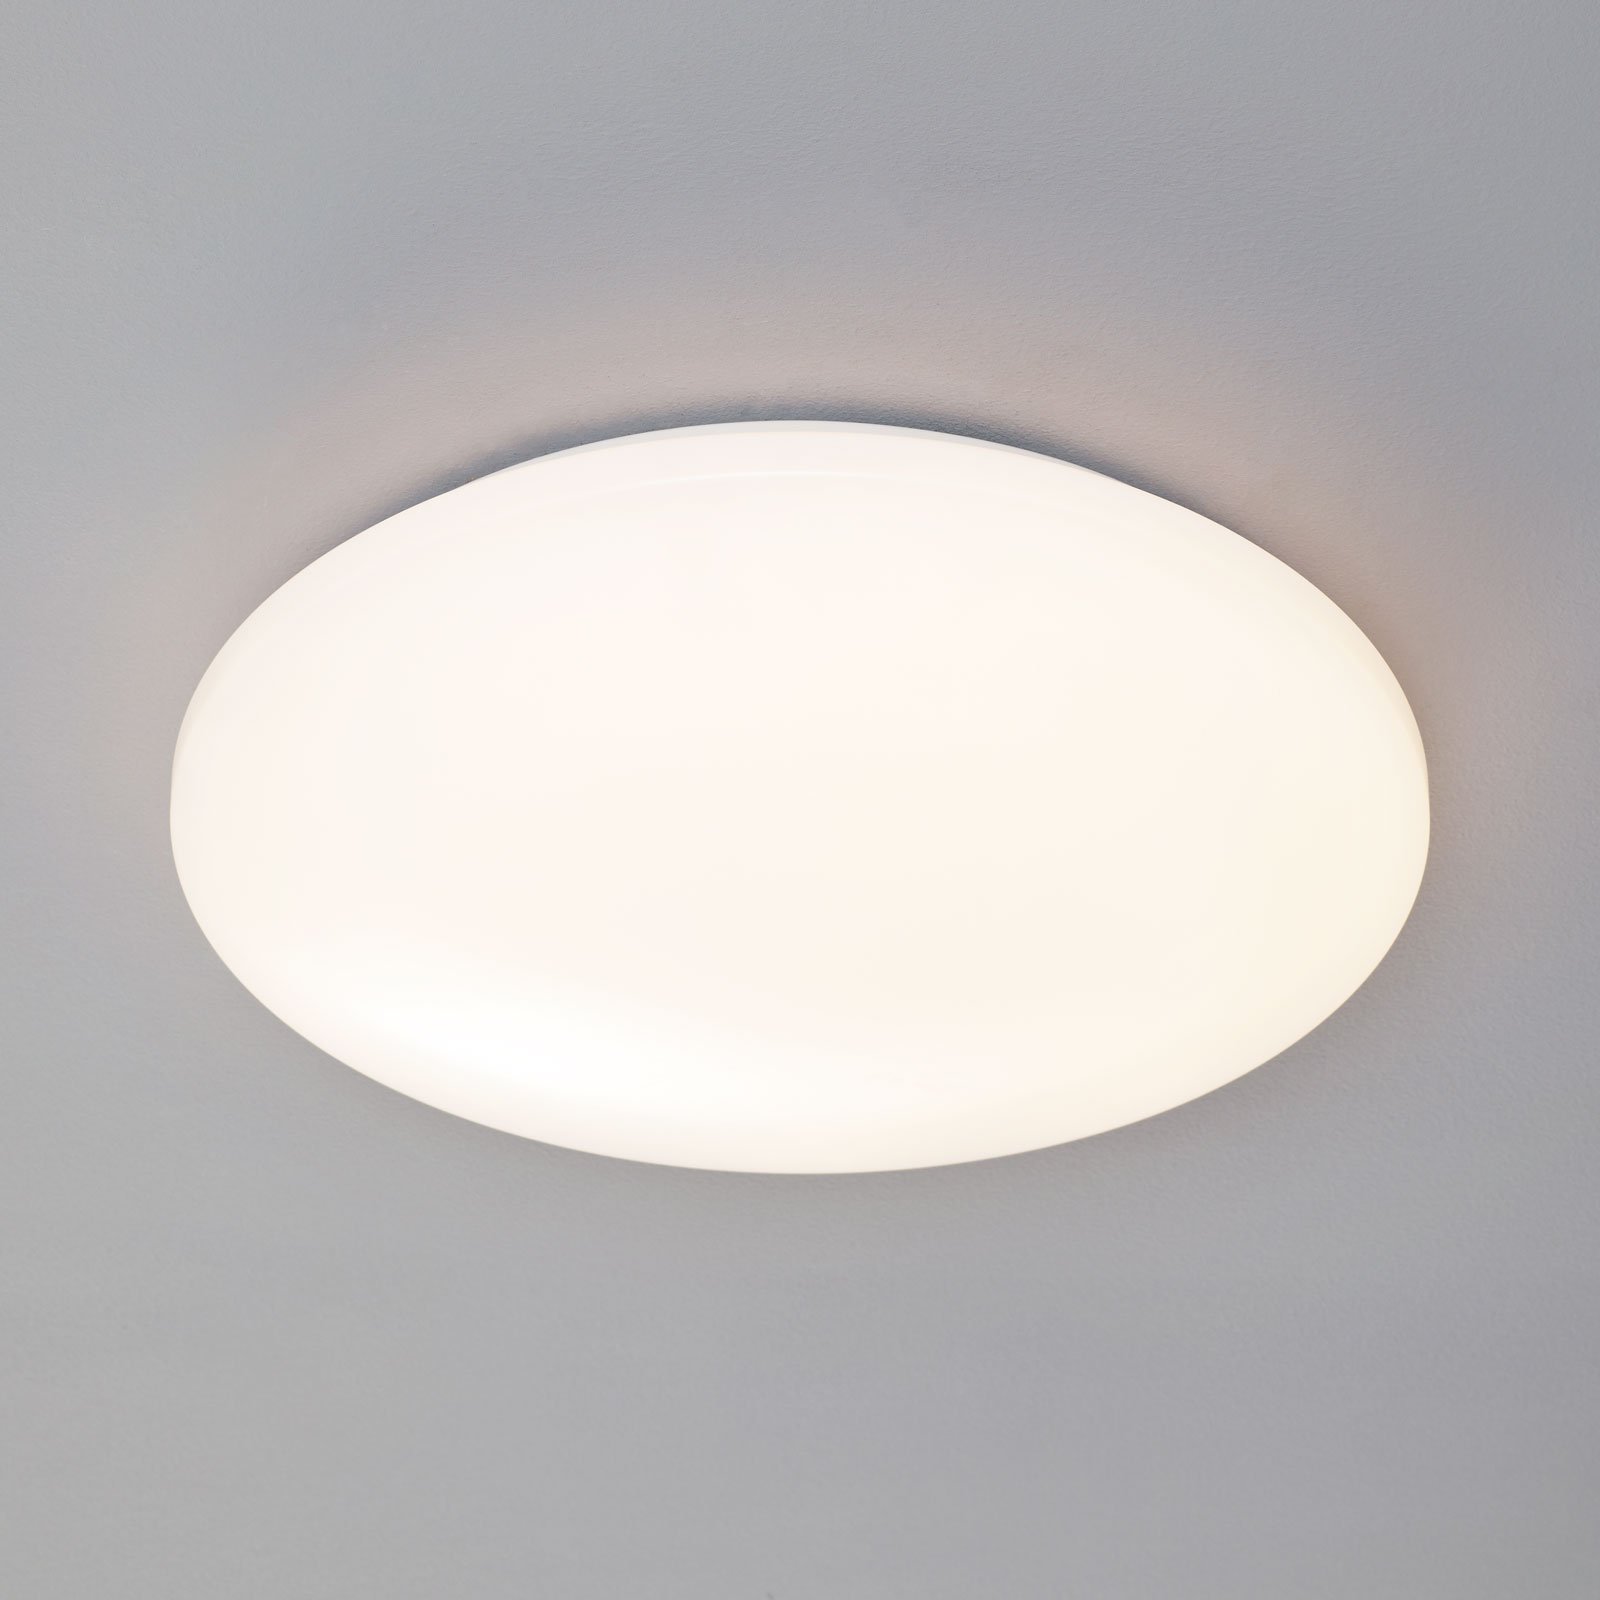 LED-taklampa Pollux, rörelsesensor, Ø 40 cm